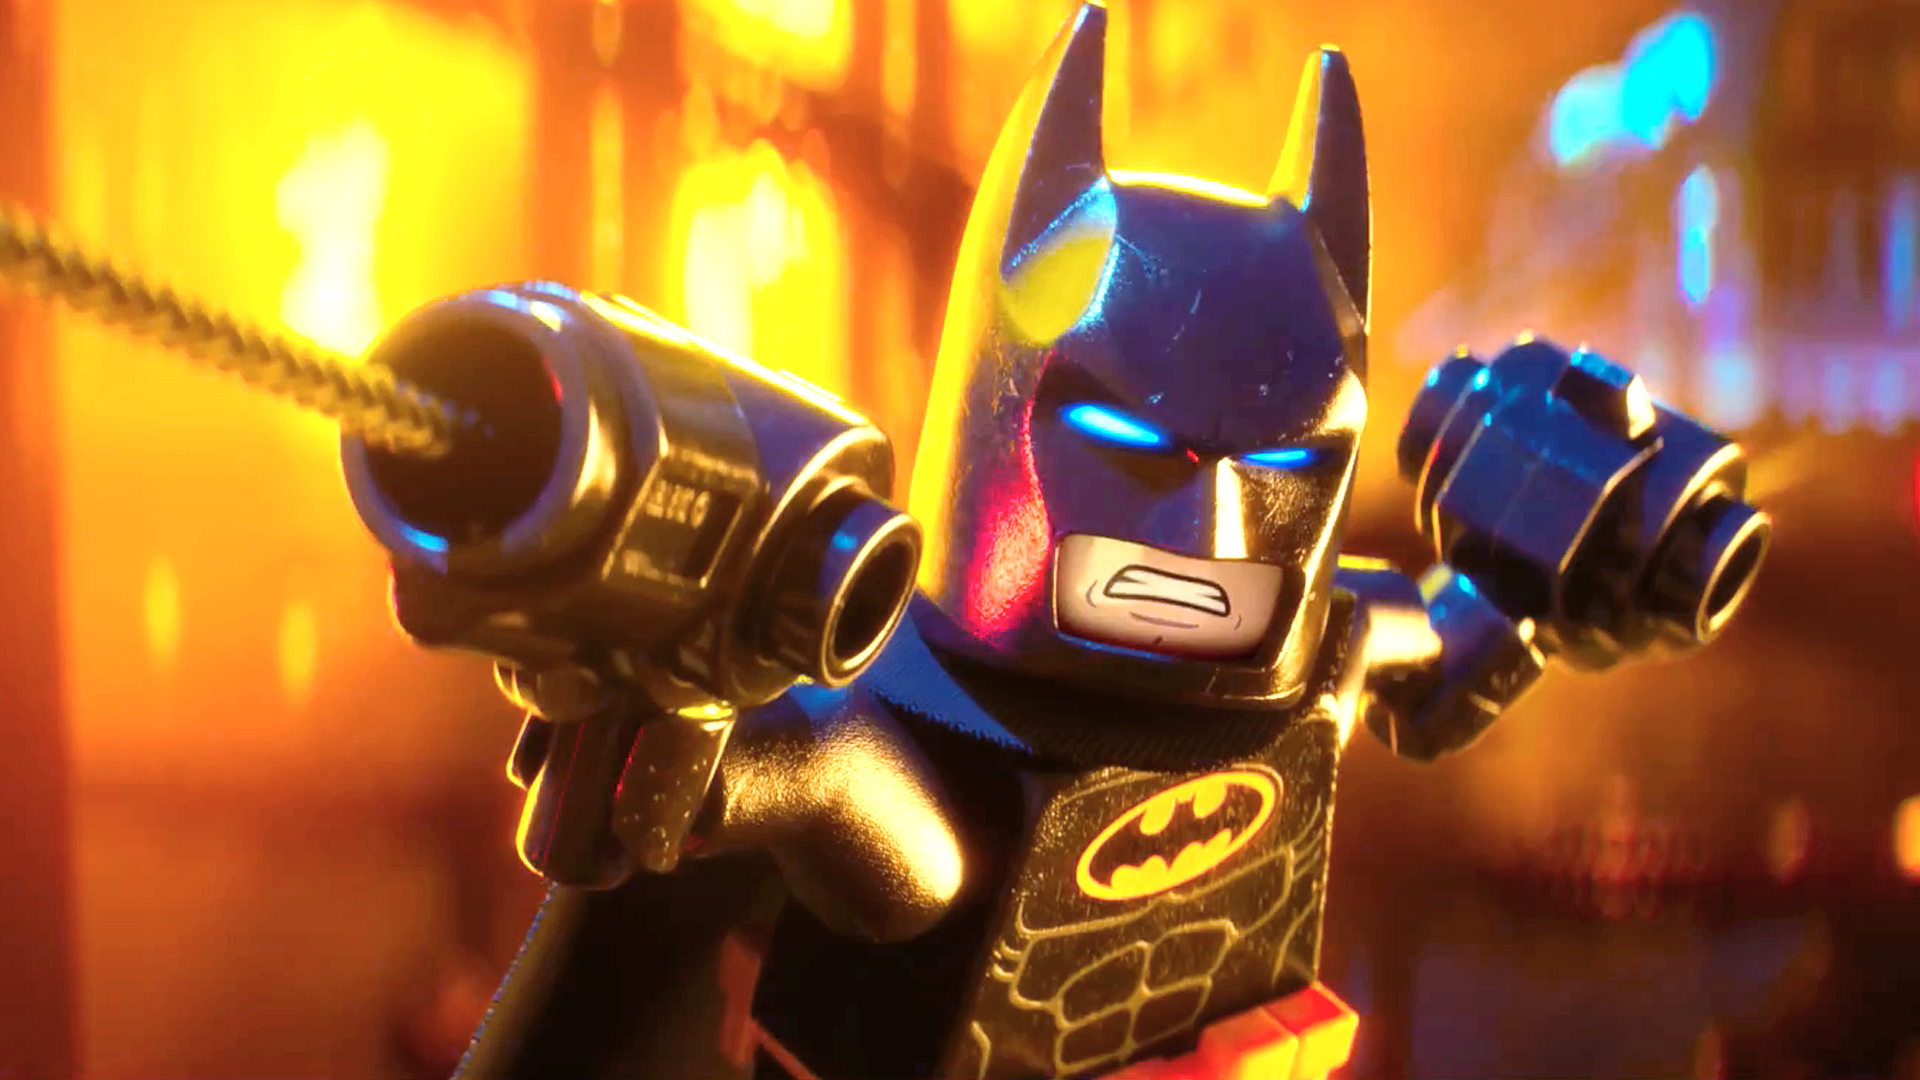 The LEGO Batman Movie' on HBO: Behold Michael Cera's Best Film Performance